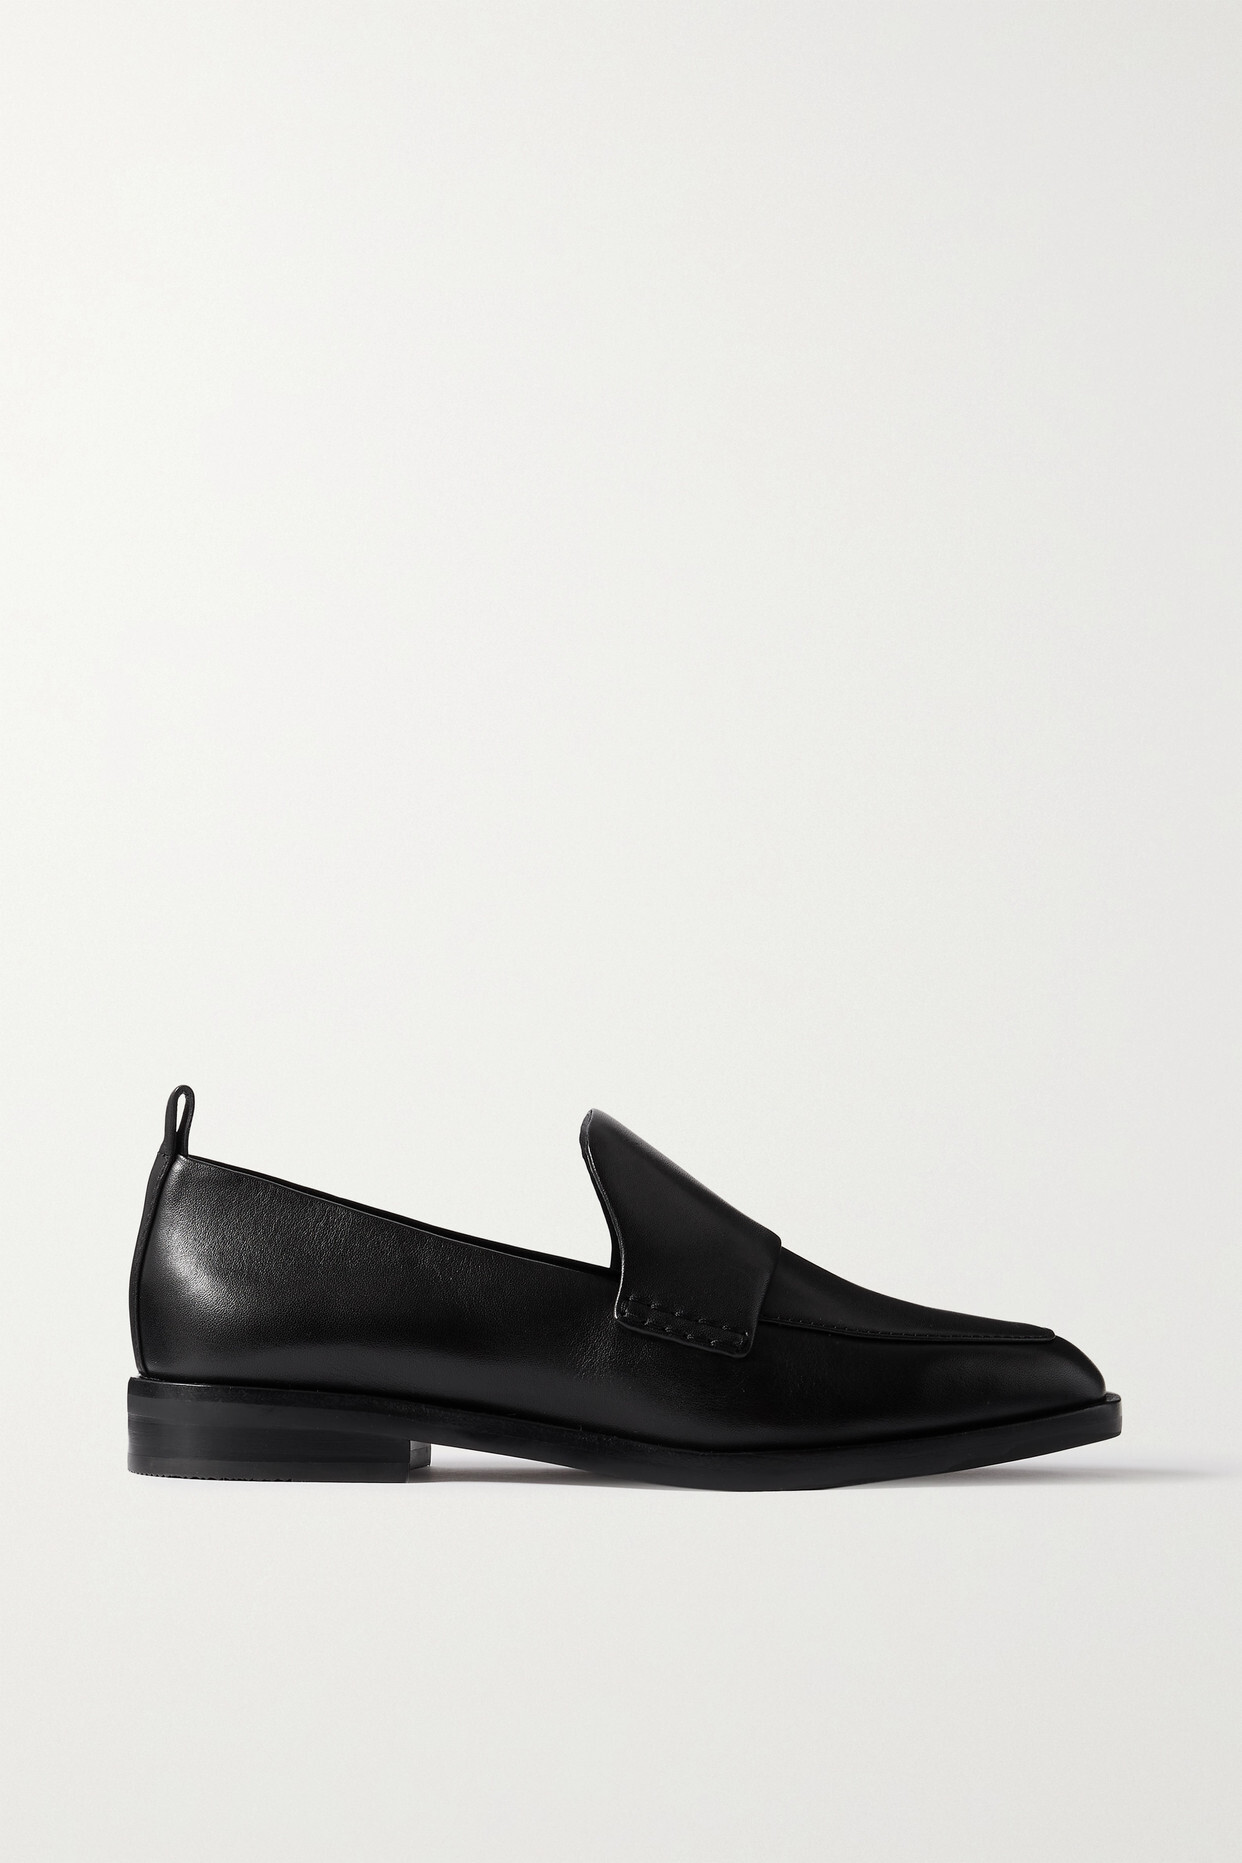 3.1 Phillip Lim - Alexa Leather Loafers - Black